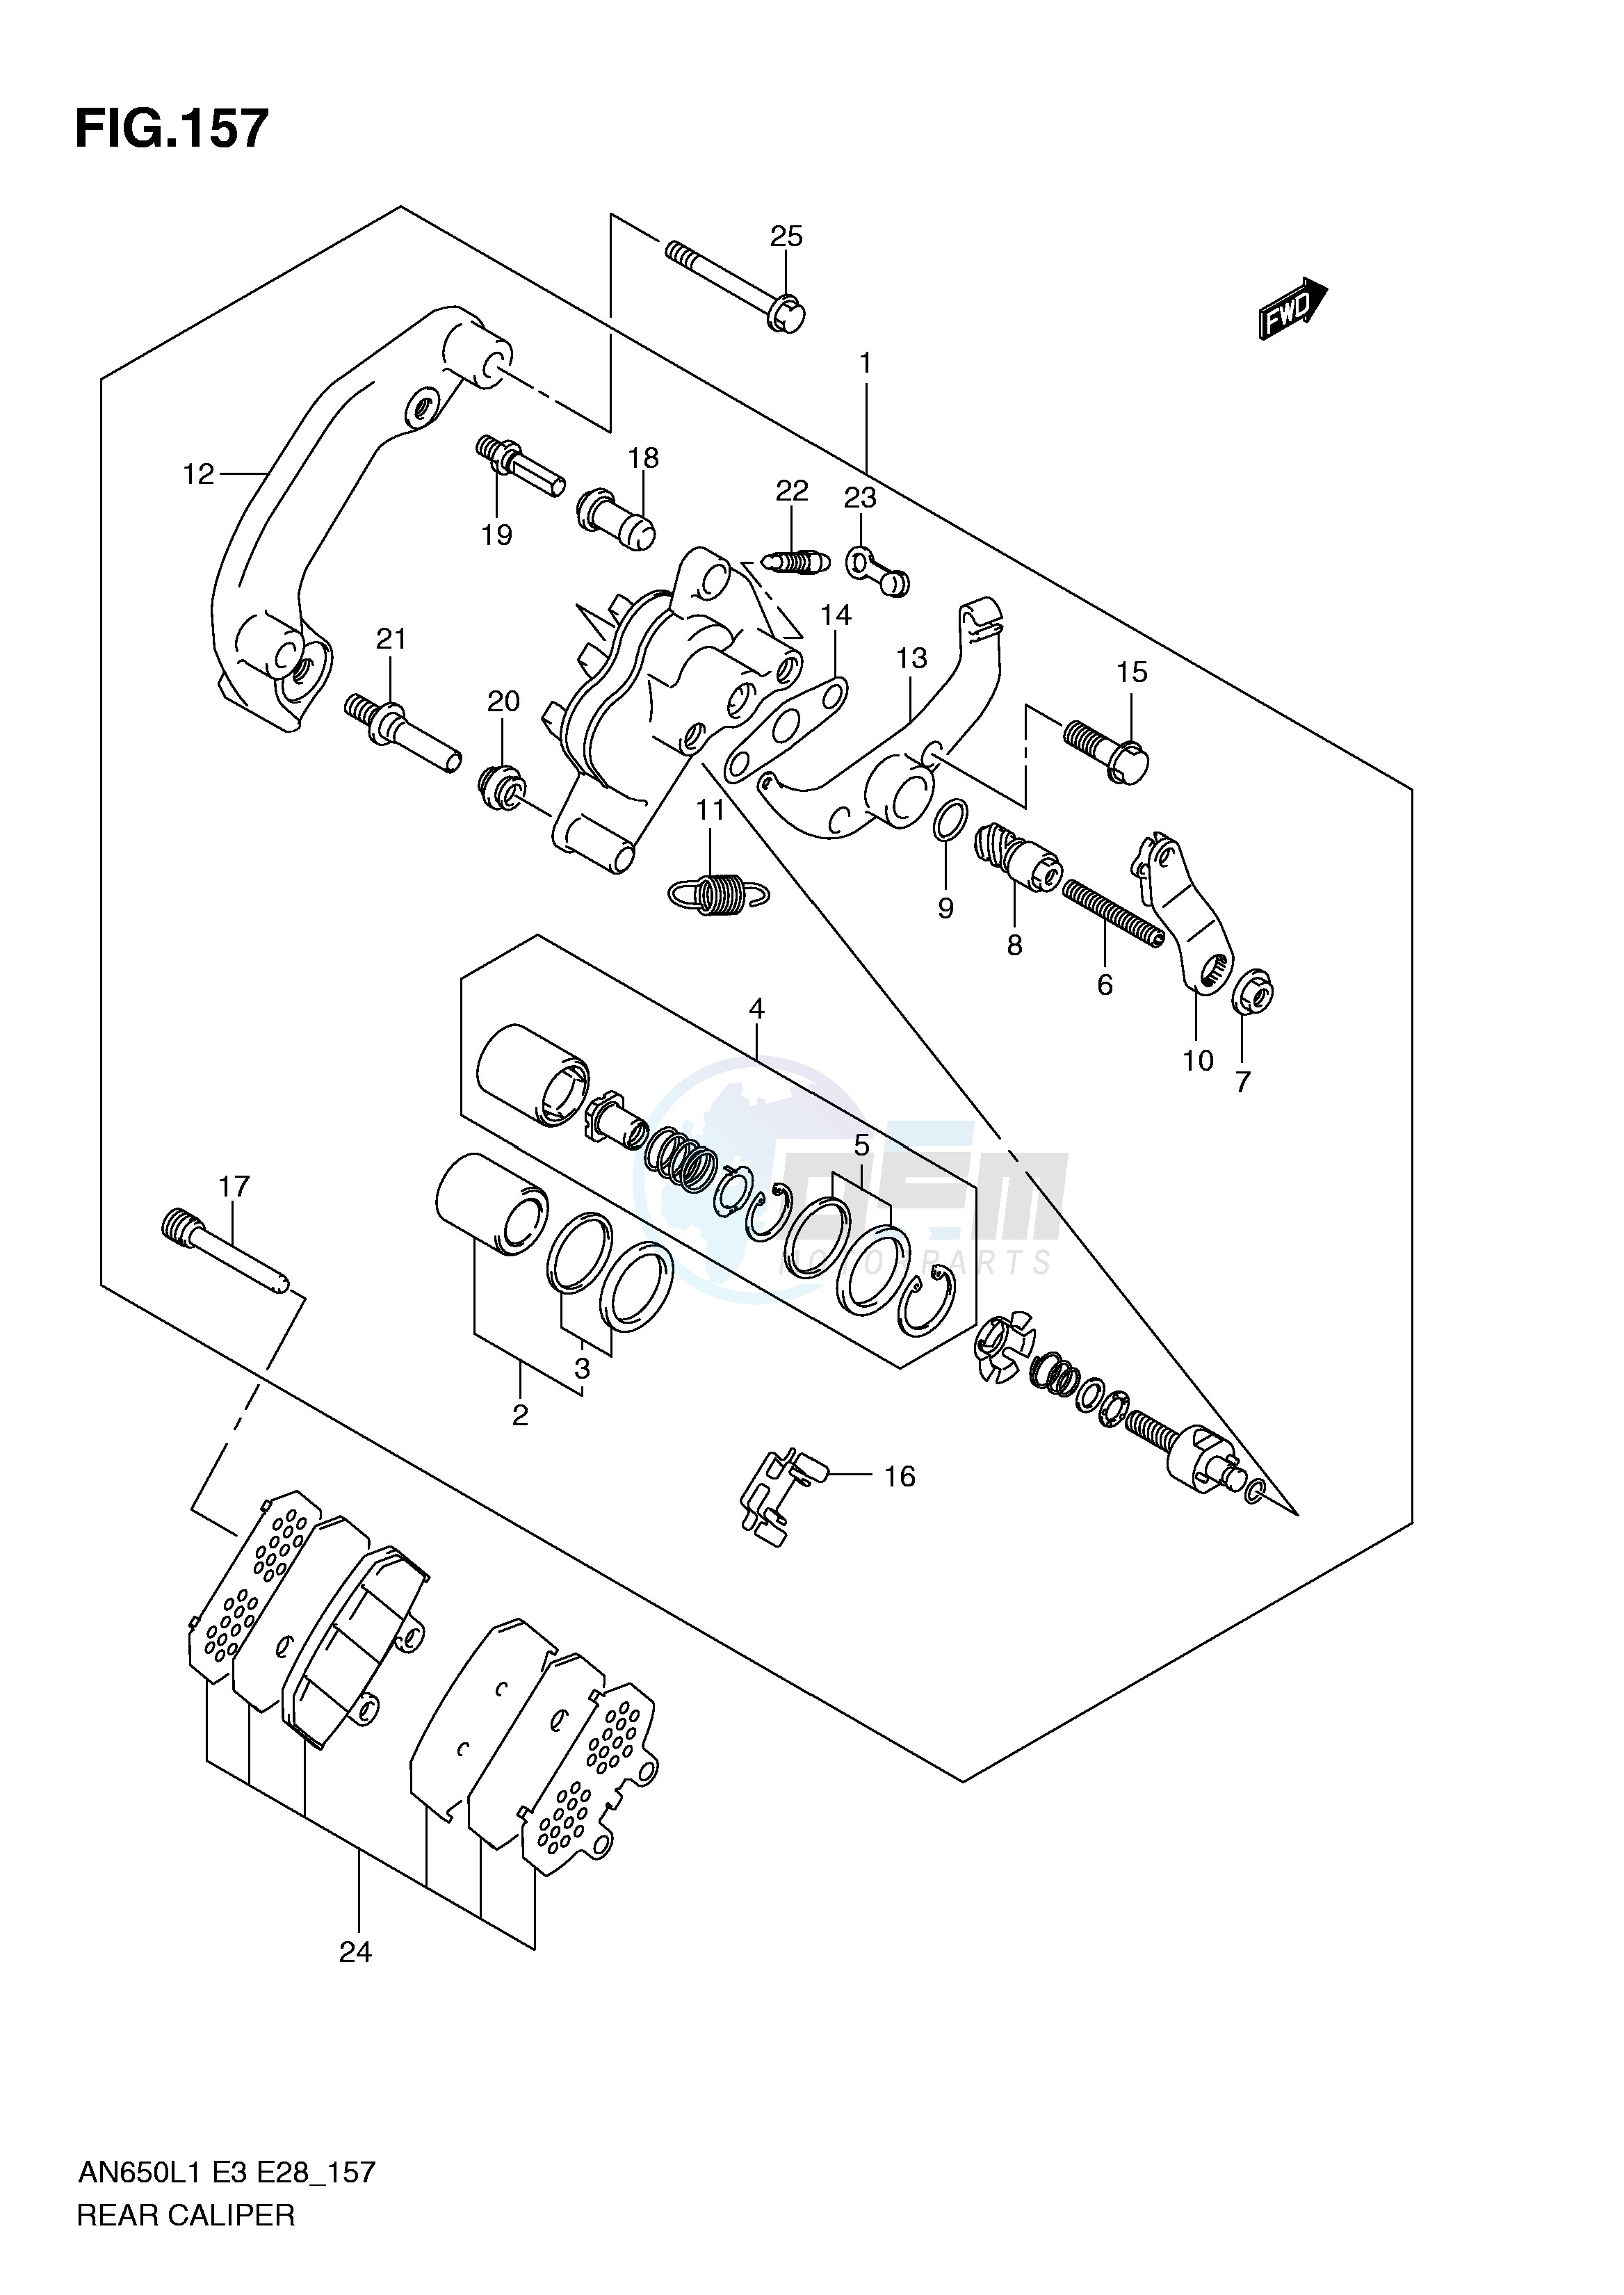 REAR CALIPER (AN650L1 E33) blueprint